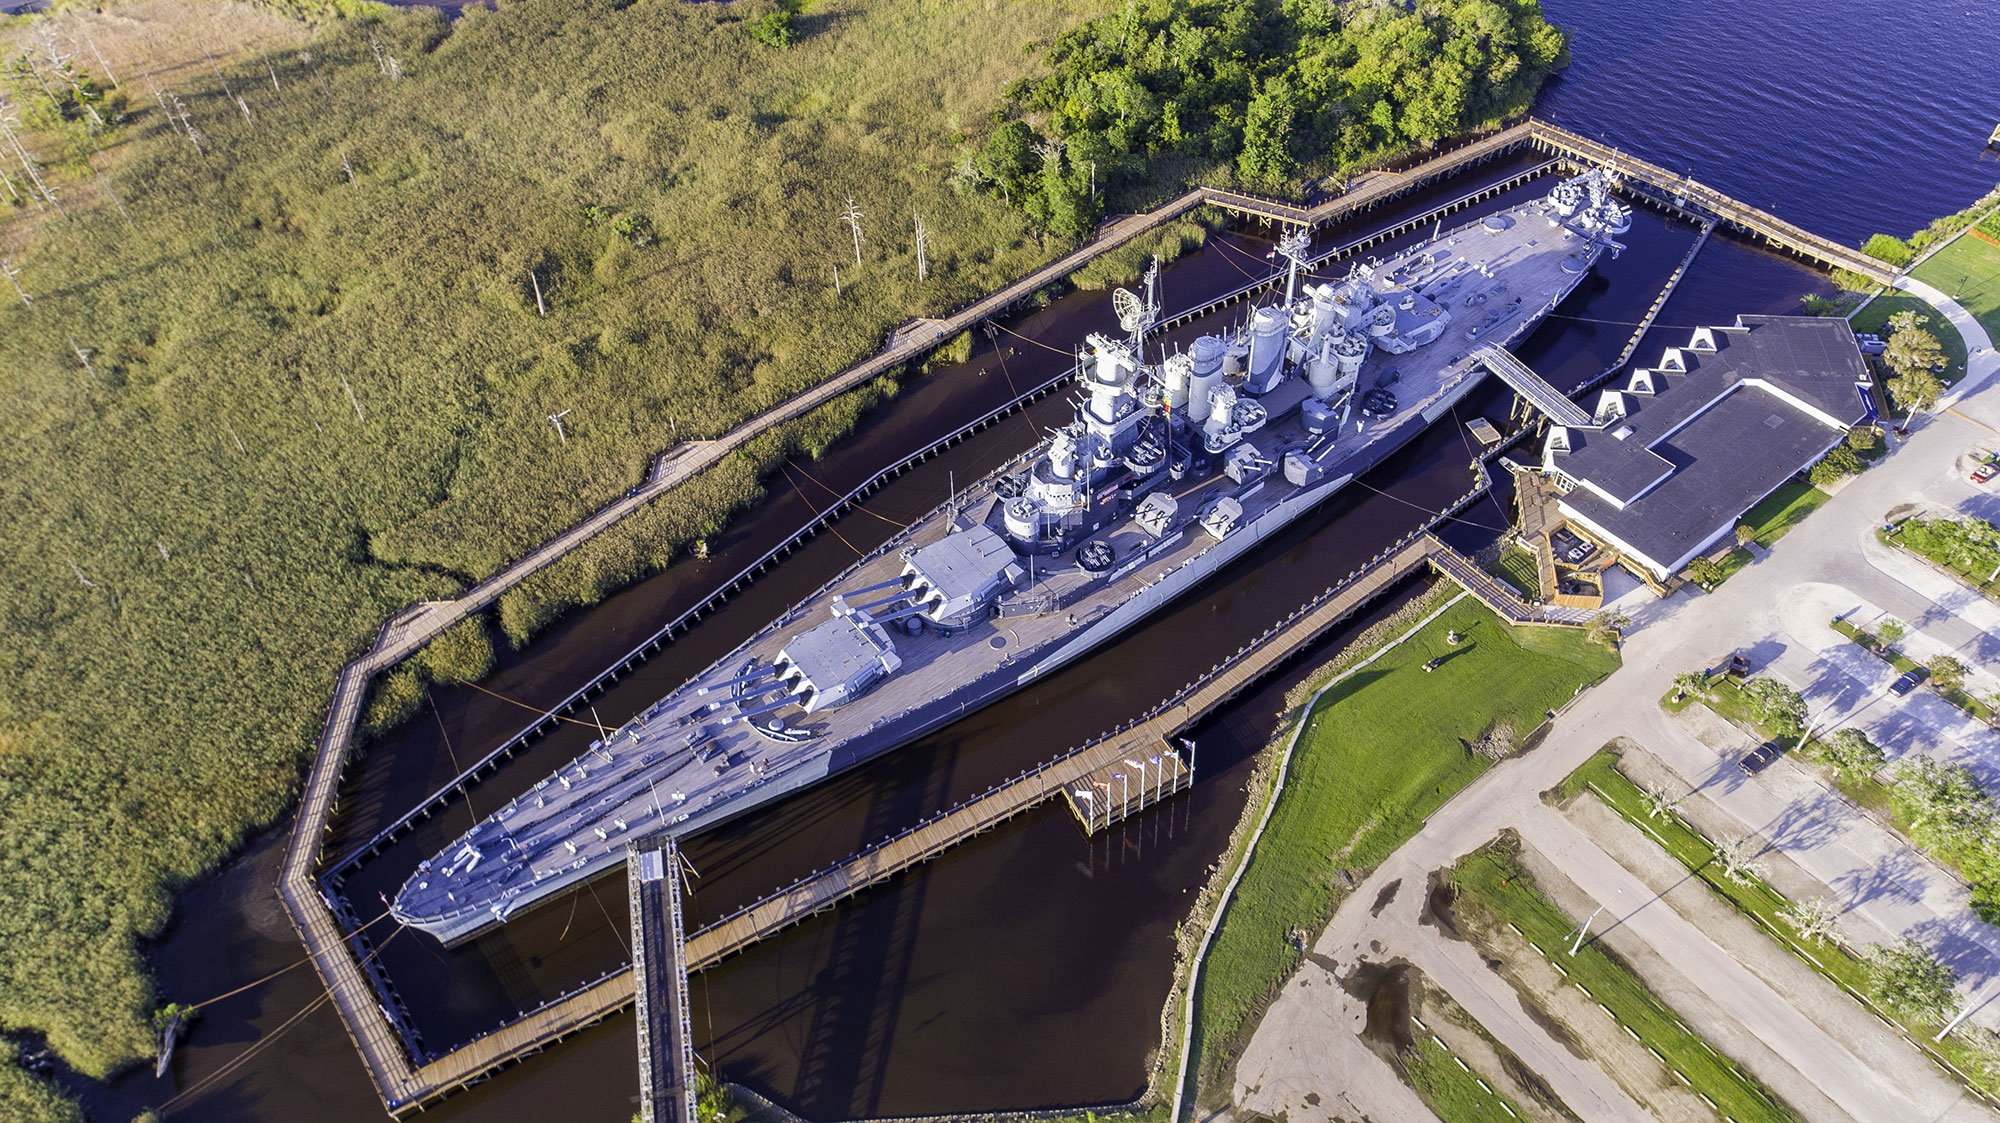 USS North Carolina Battleship